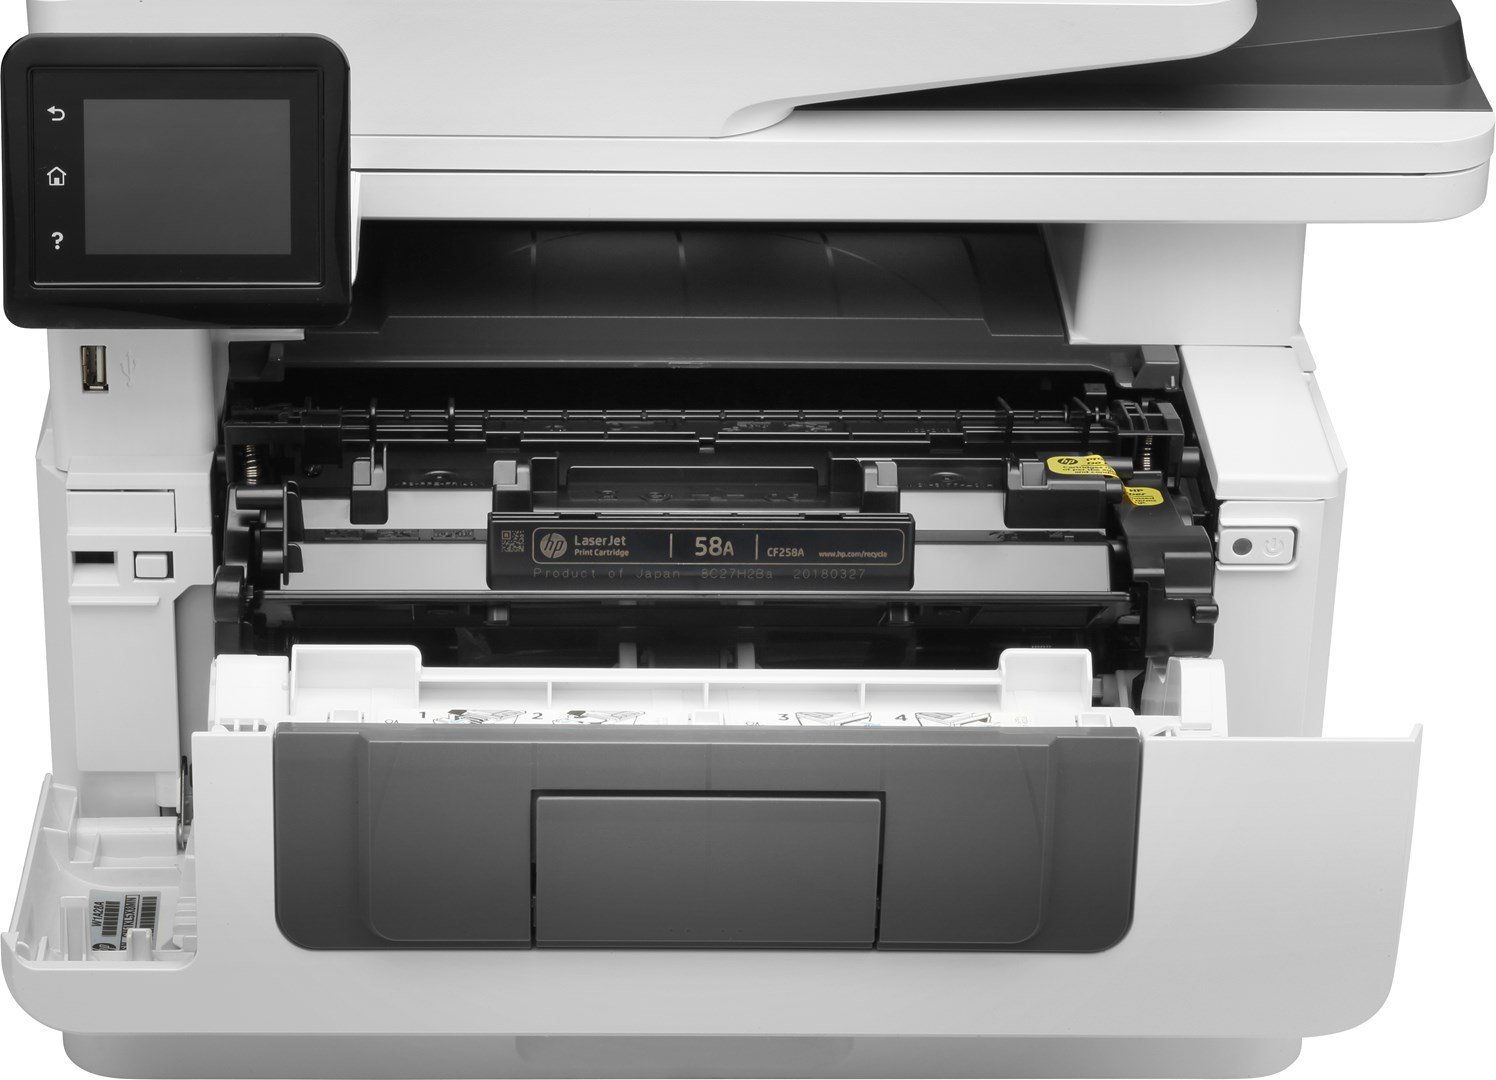 Daugiafunkcis spausdintuvas HP LaserJet Pro MFP M428fdn, lazerinis - 7